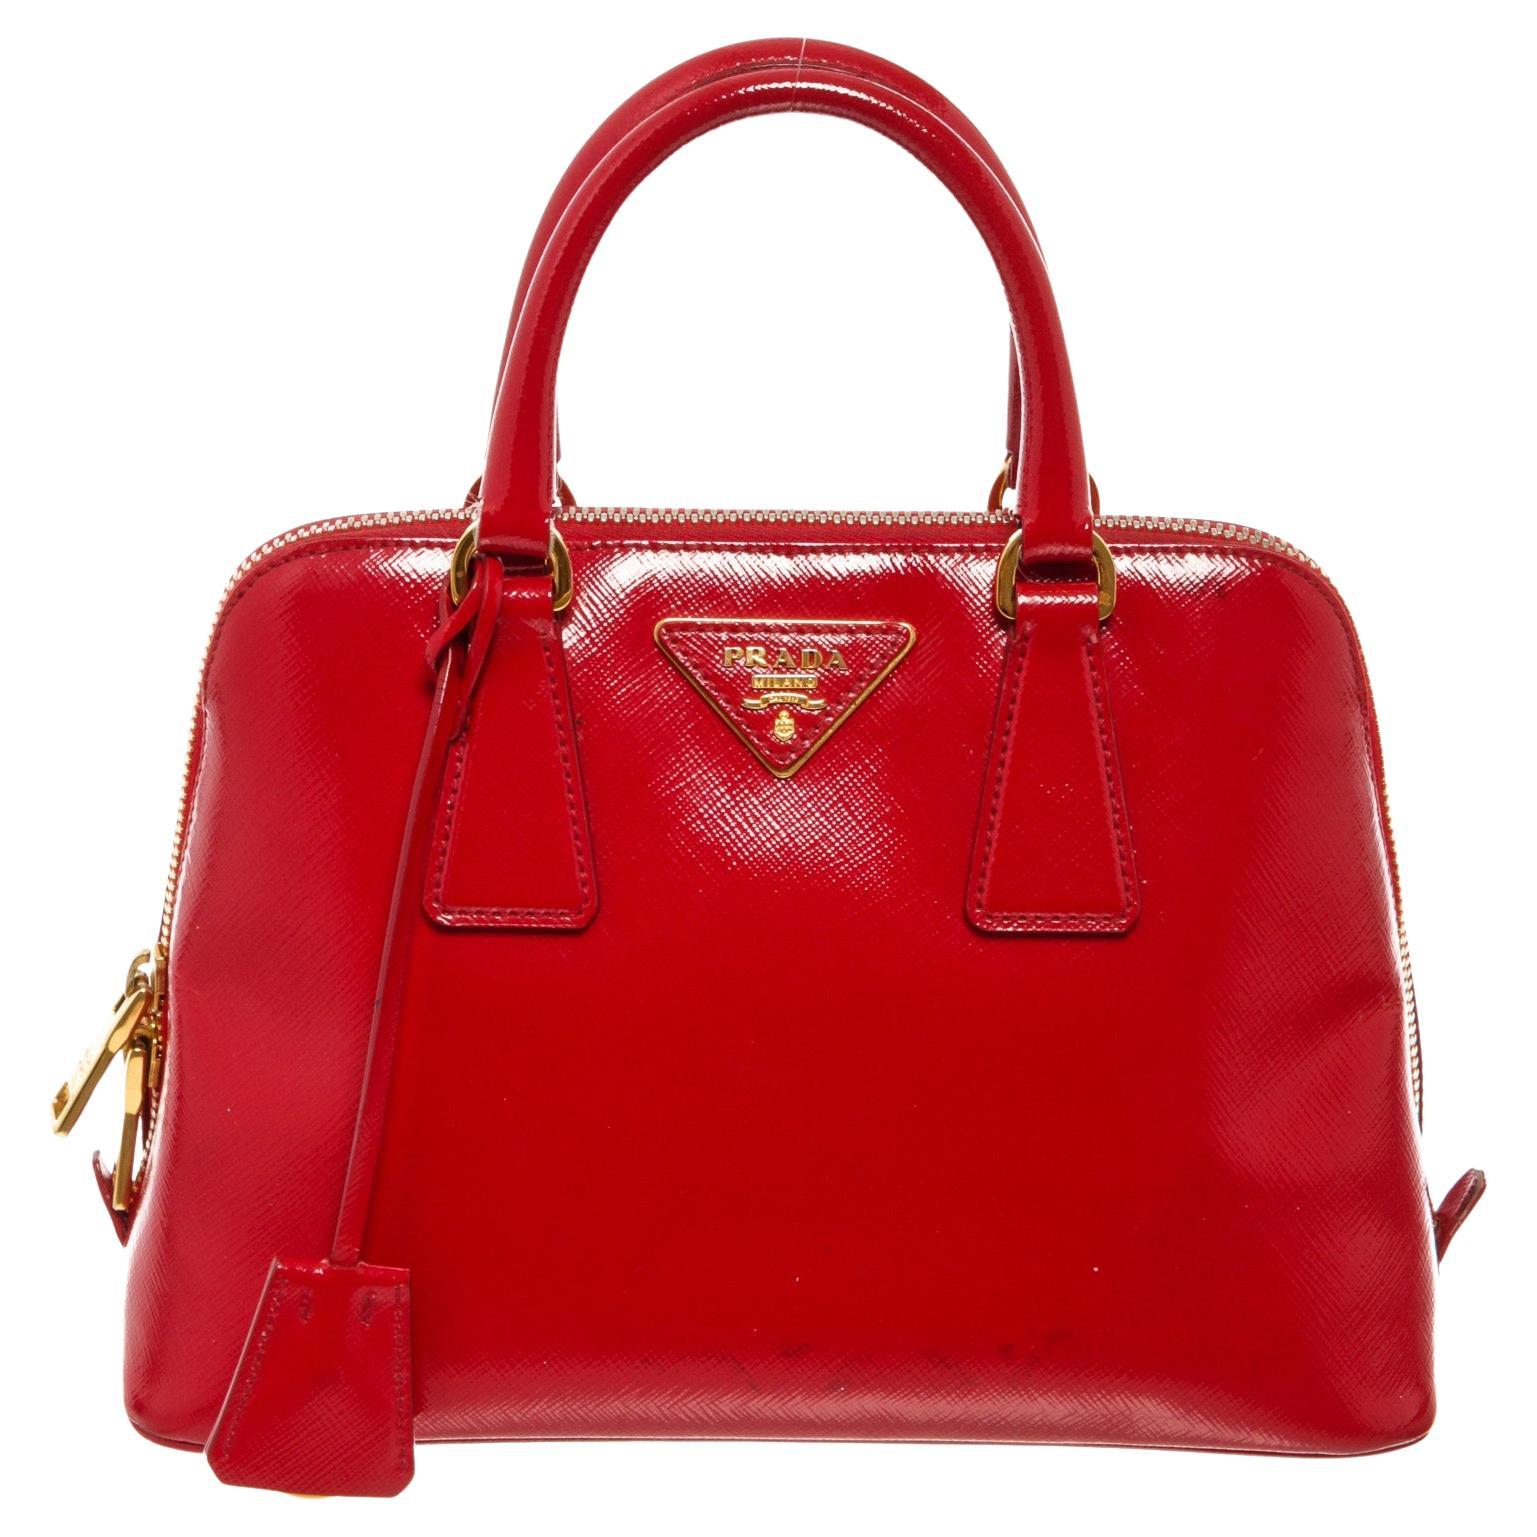 Prada Red Saffiano Vernice Leather Top Handle Handbag